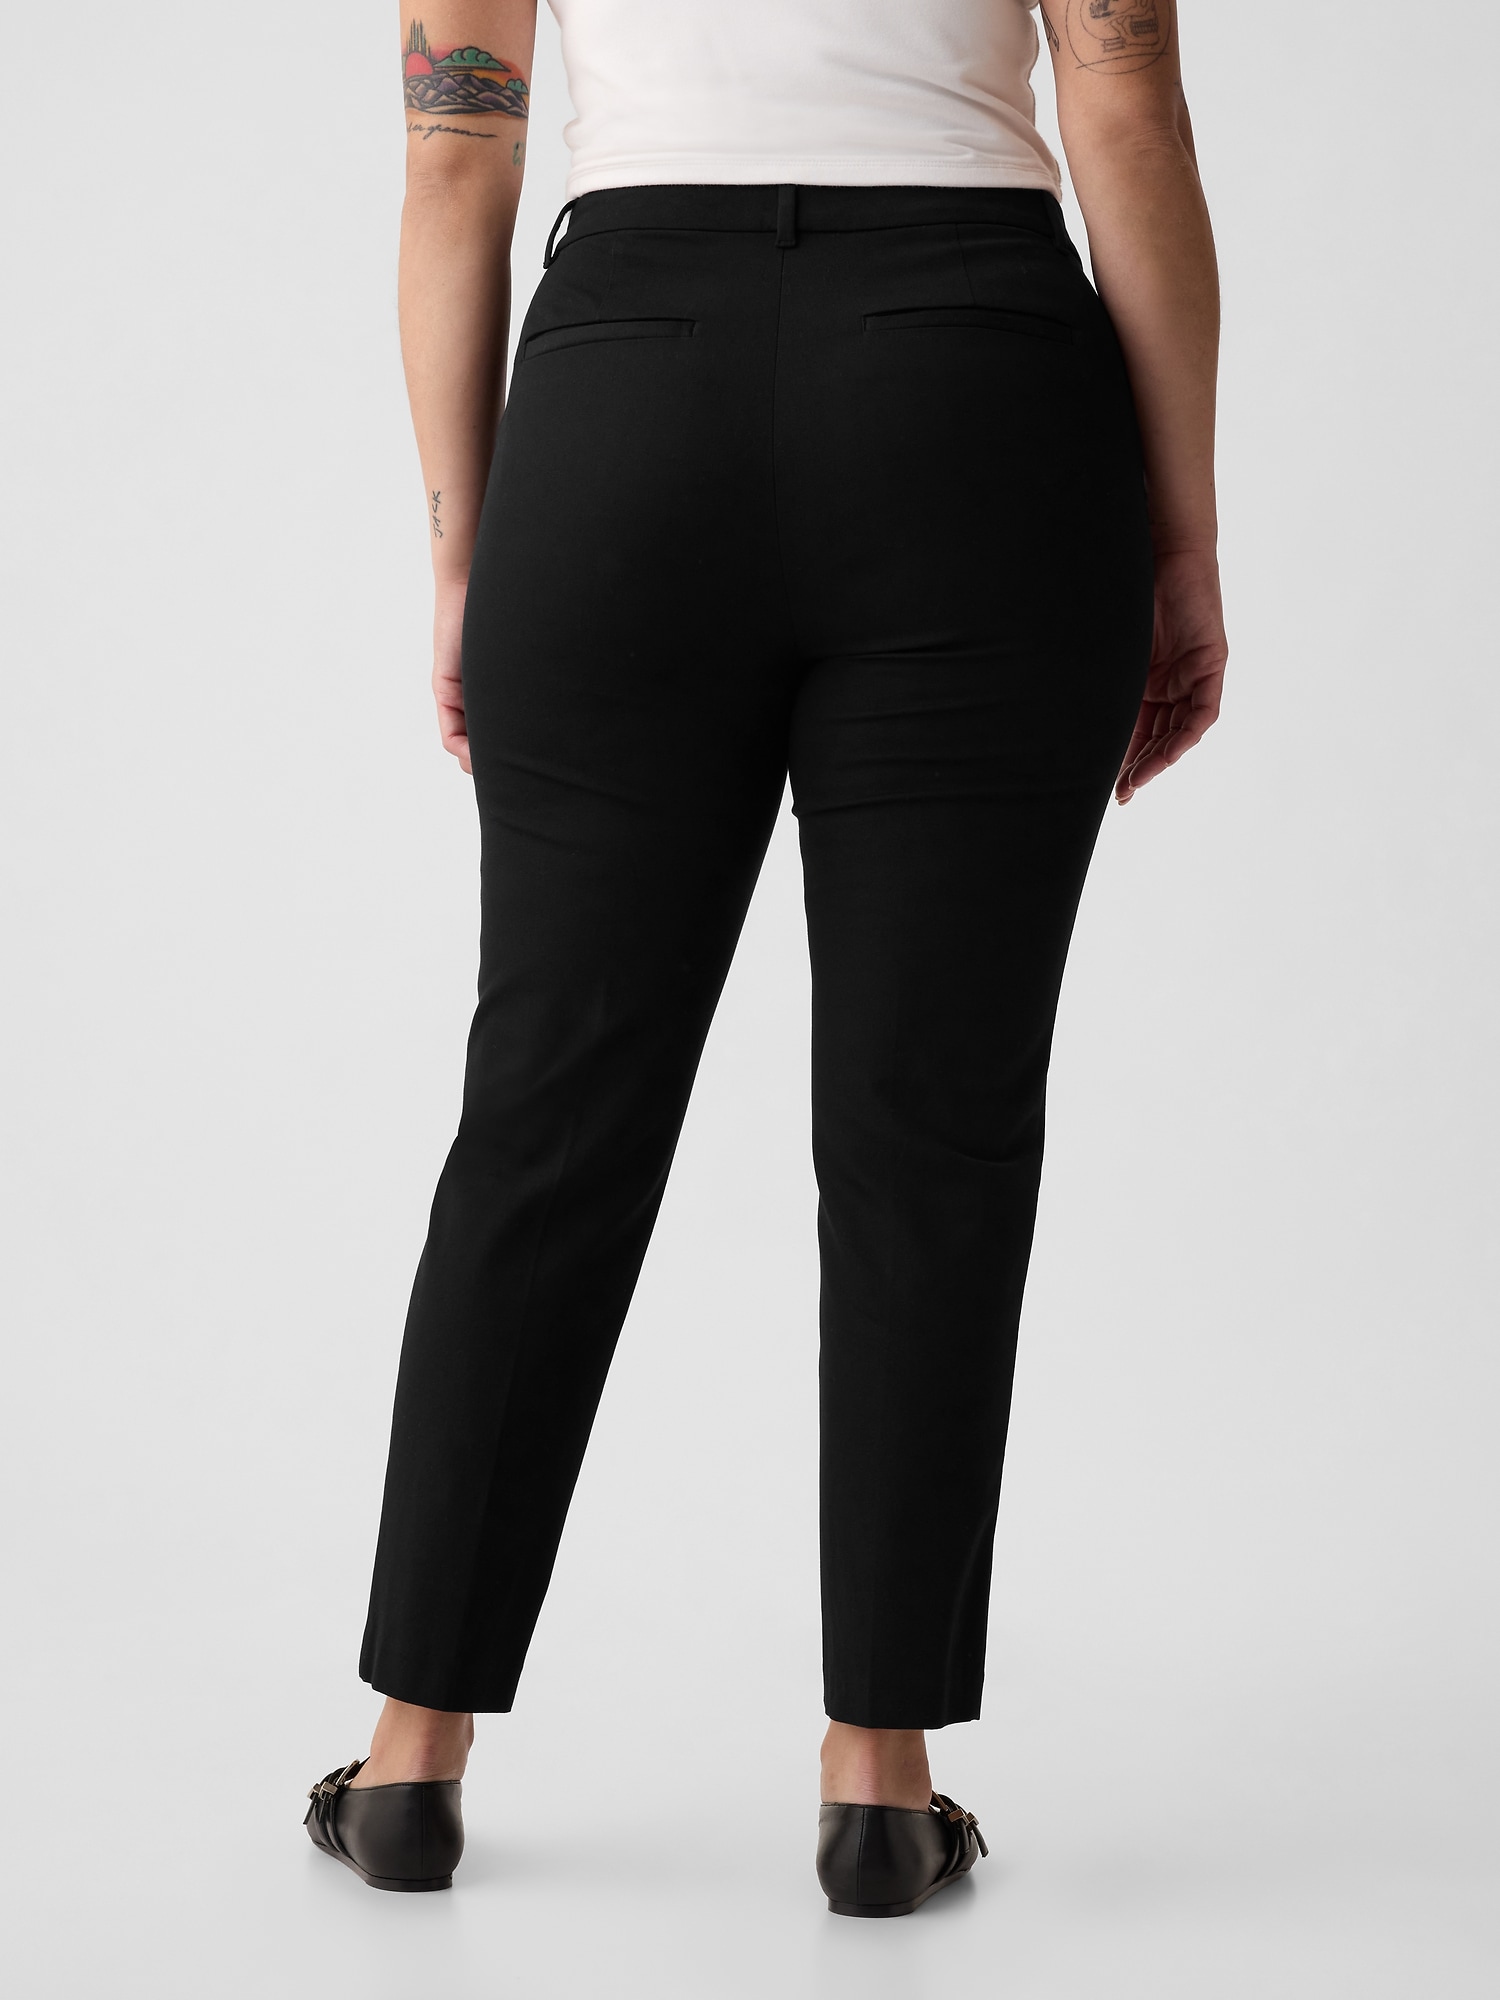 456-Gap tan pants size 8R Gap tan pants size 8R 16 inches waist across 32  inches inseam GAP Pants & Jumpsuits Straight Leg